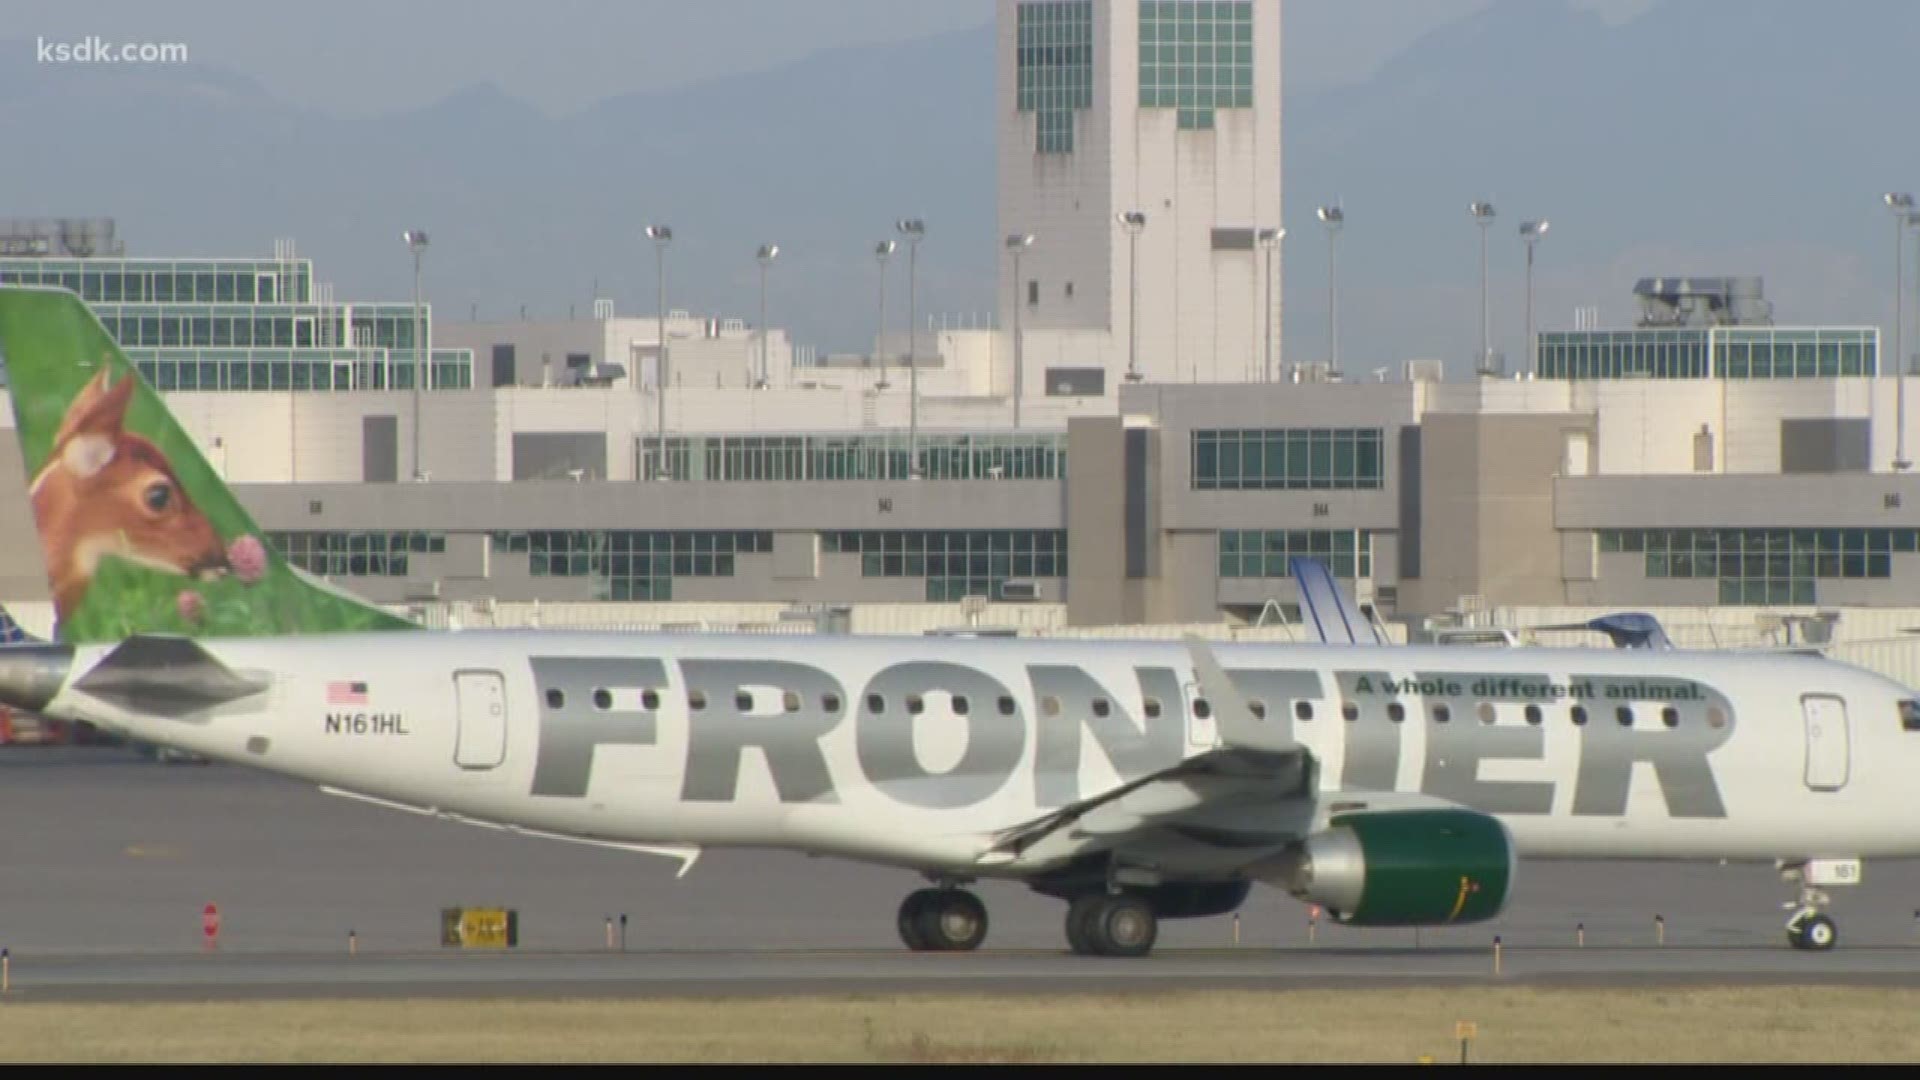 Frontier offering $29 flights to Tampa, $69 flights to Denver | www.paulmartinsmith.com